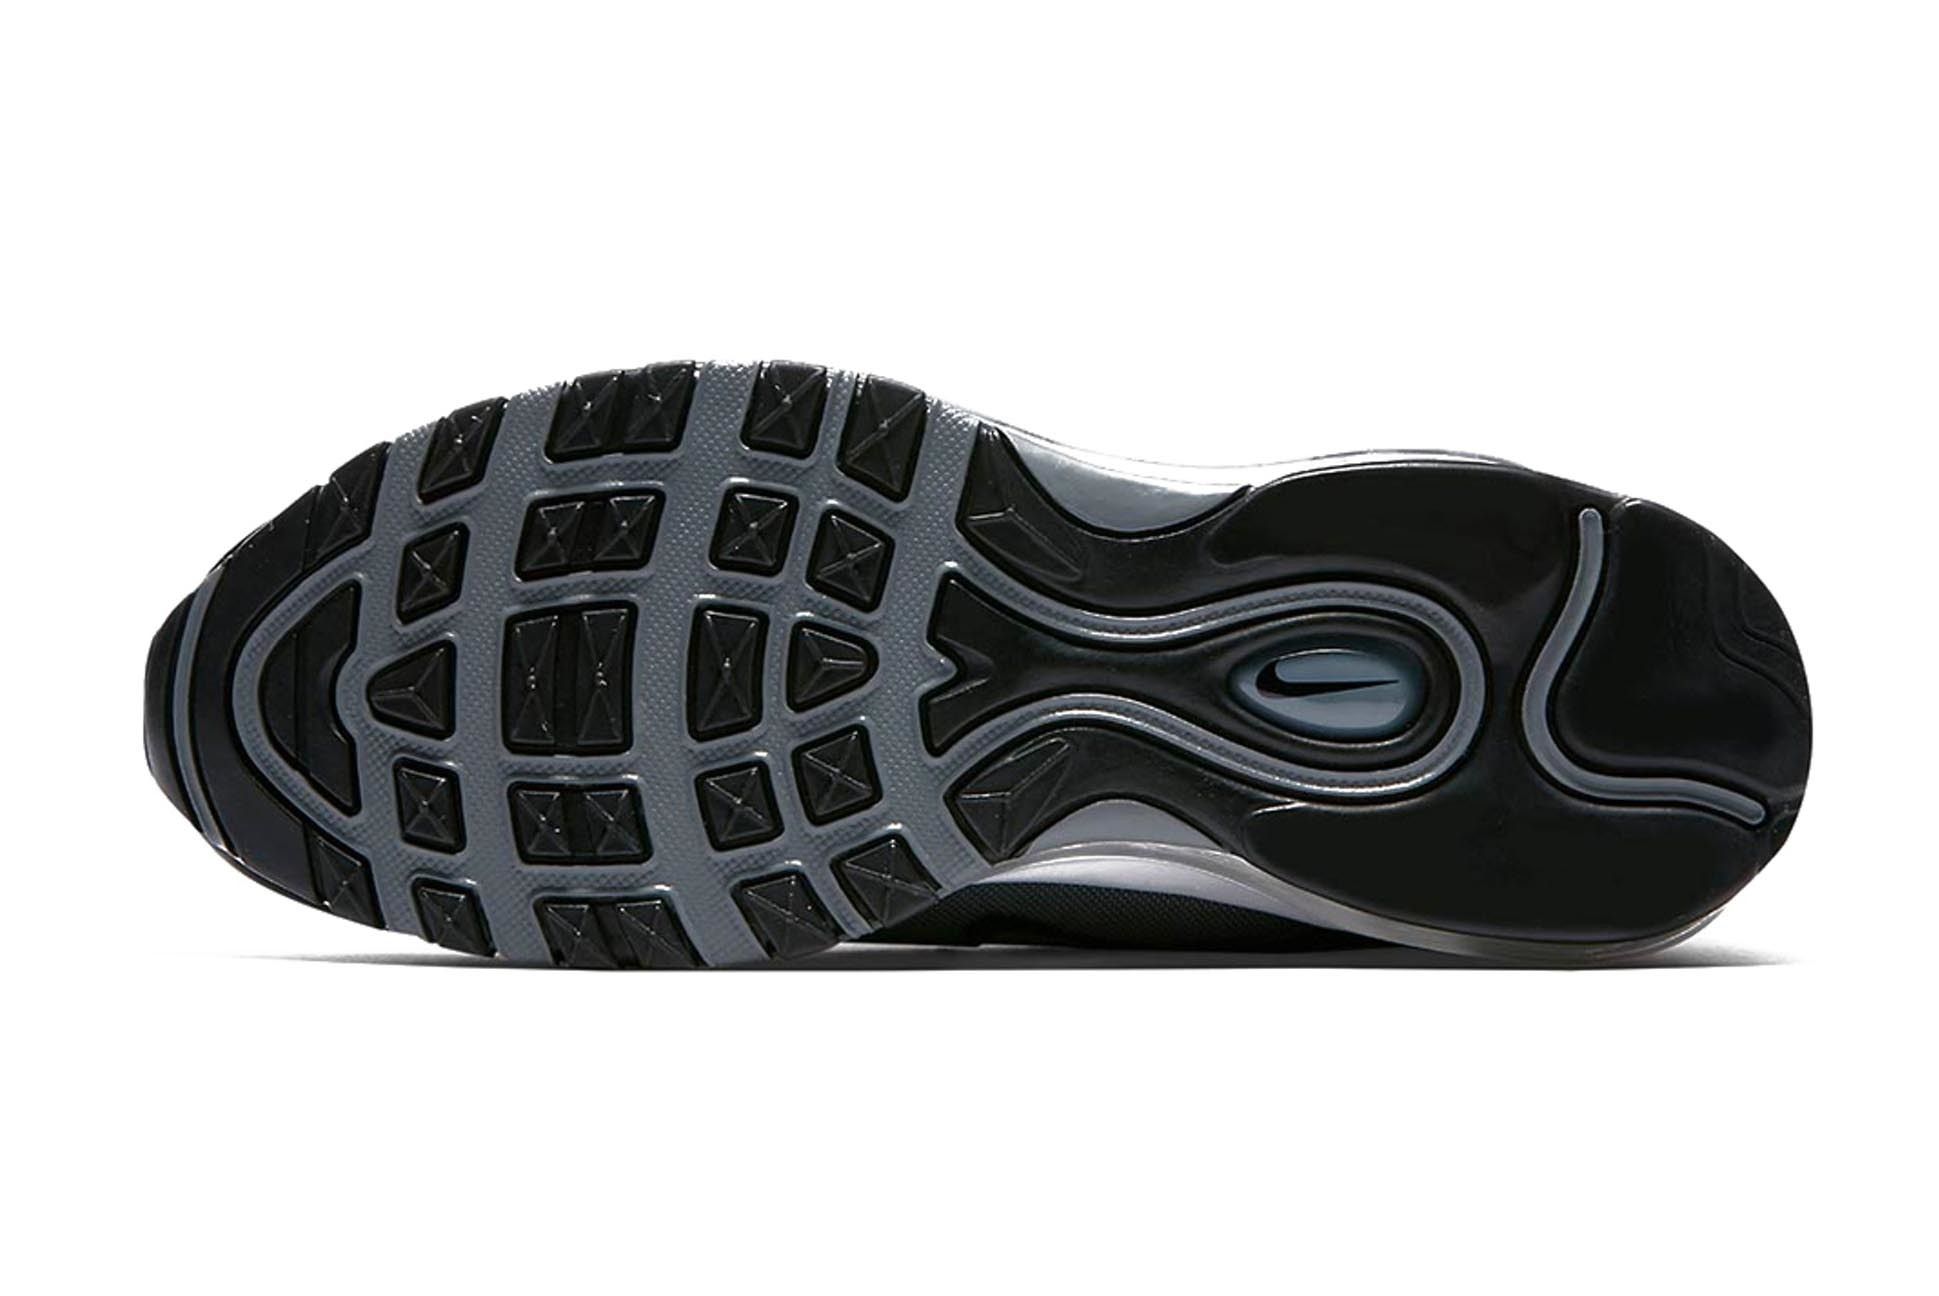 Nike Air Max 97 Black Patent Leather Release 004 Sneaker Freaker